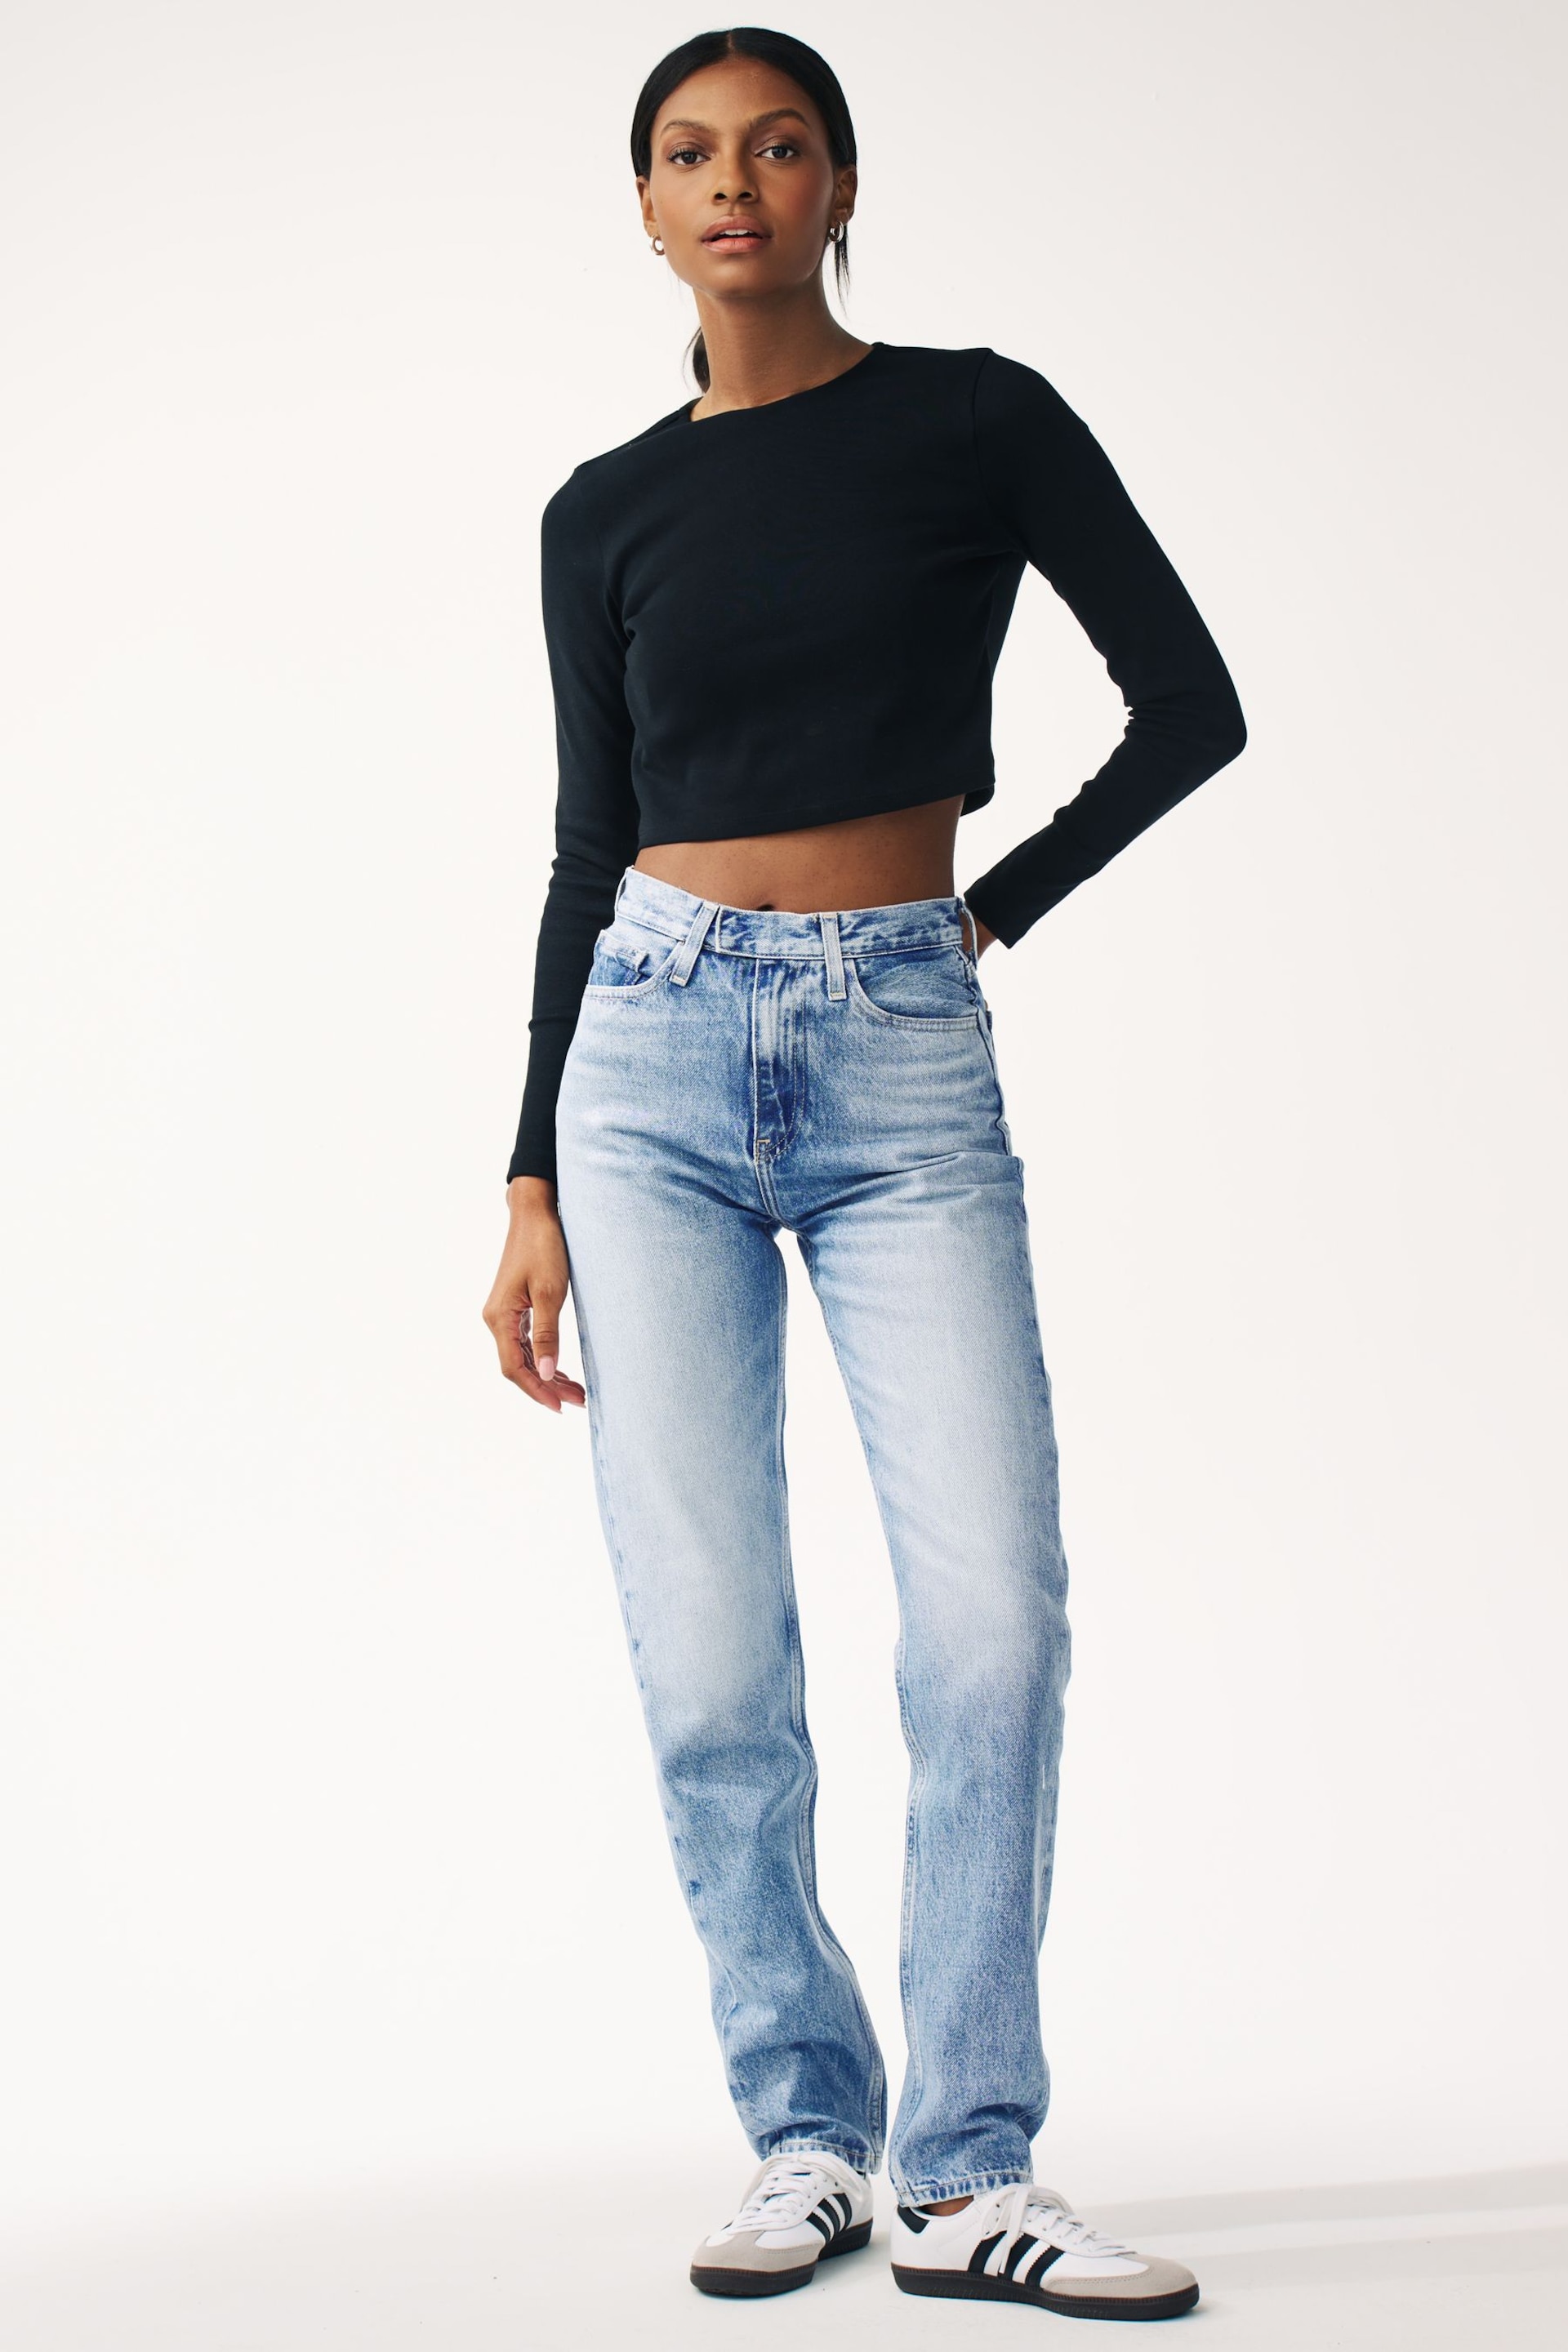 Calvin Klein Jeans Blue Authentic Slim Jeans - Image 3 of 7